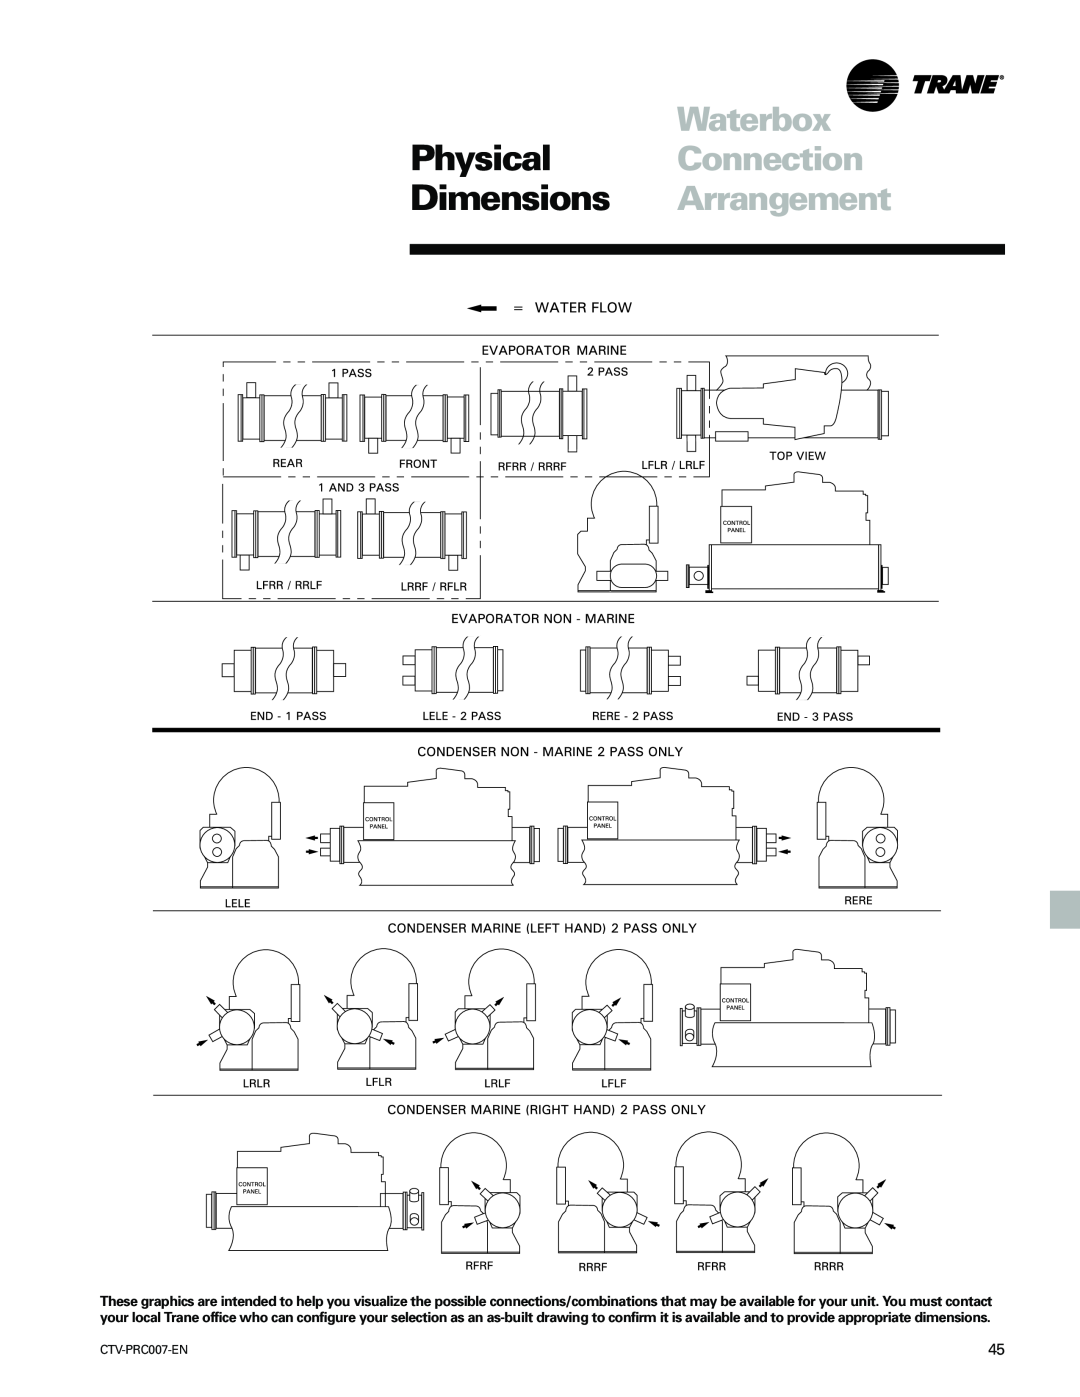 Trane ctv-prc007-en manual Dimensions Arrangement, Waterbox Physical Connection 